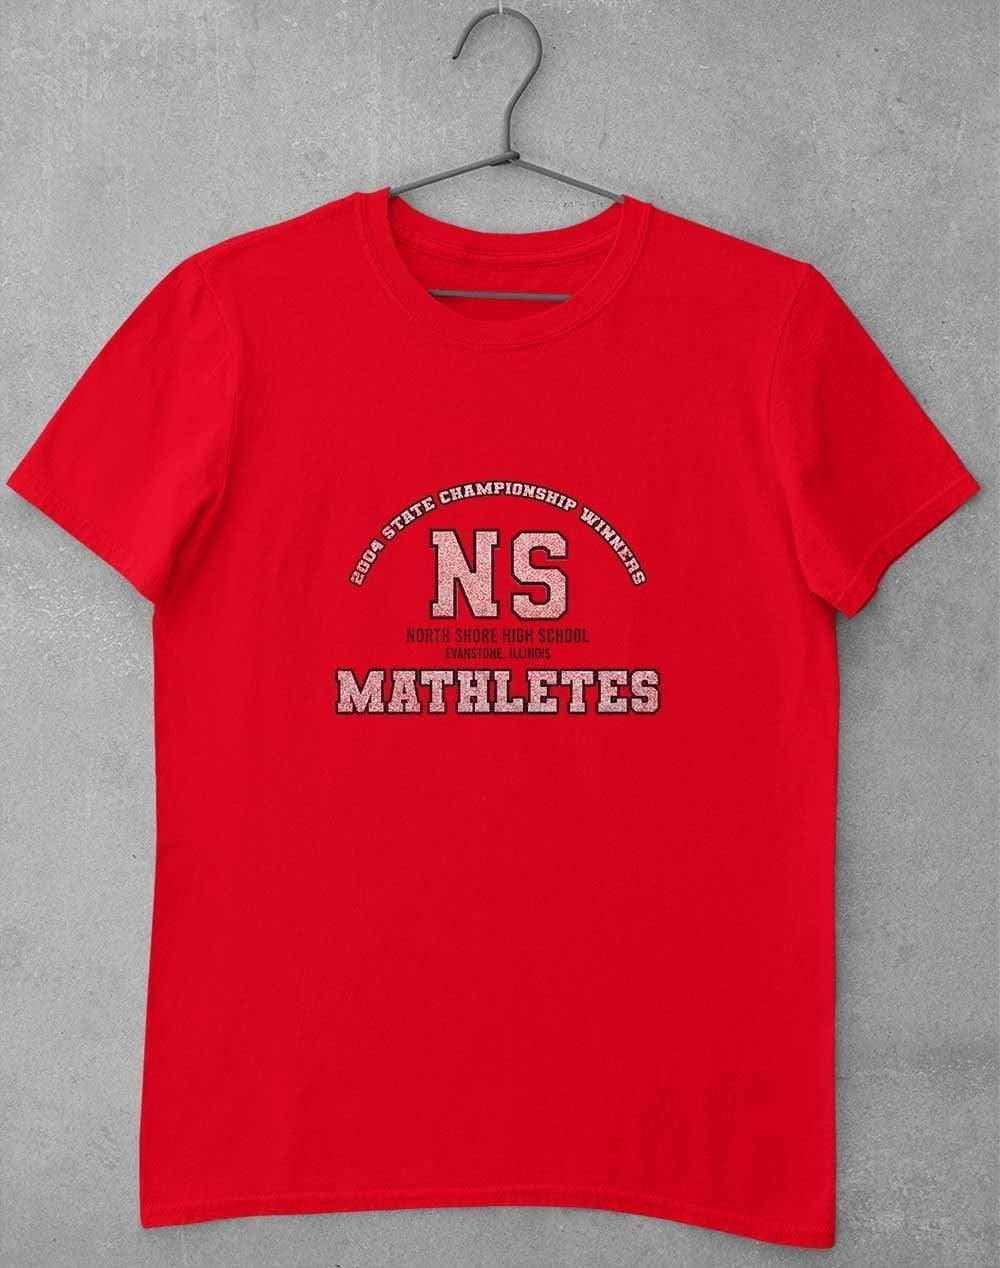 North Shore High School - Mathletes T-Shirt S / Cardinal Red  - Off World Tees